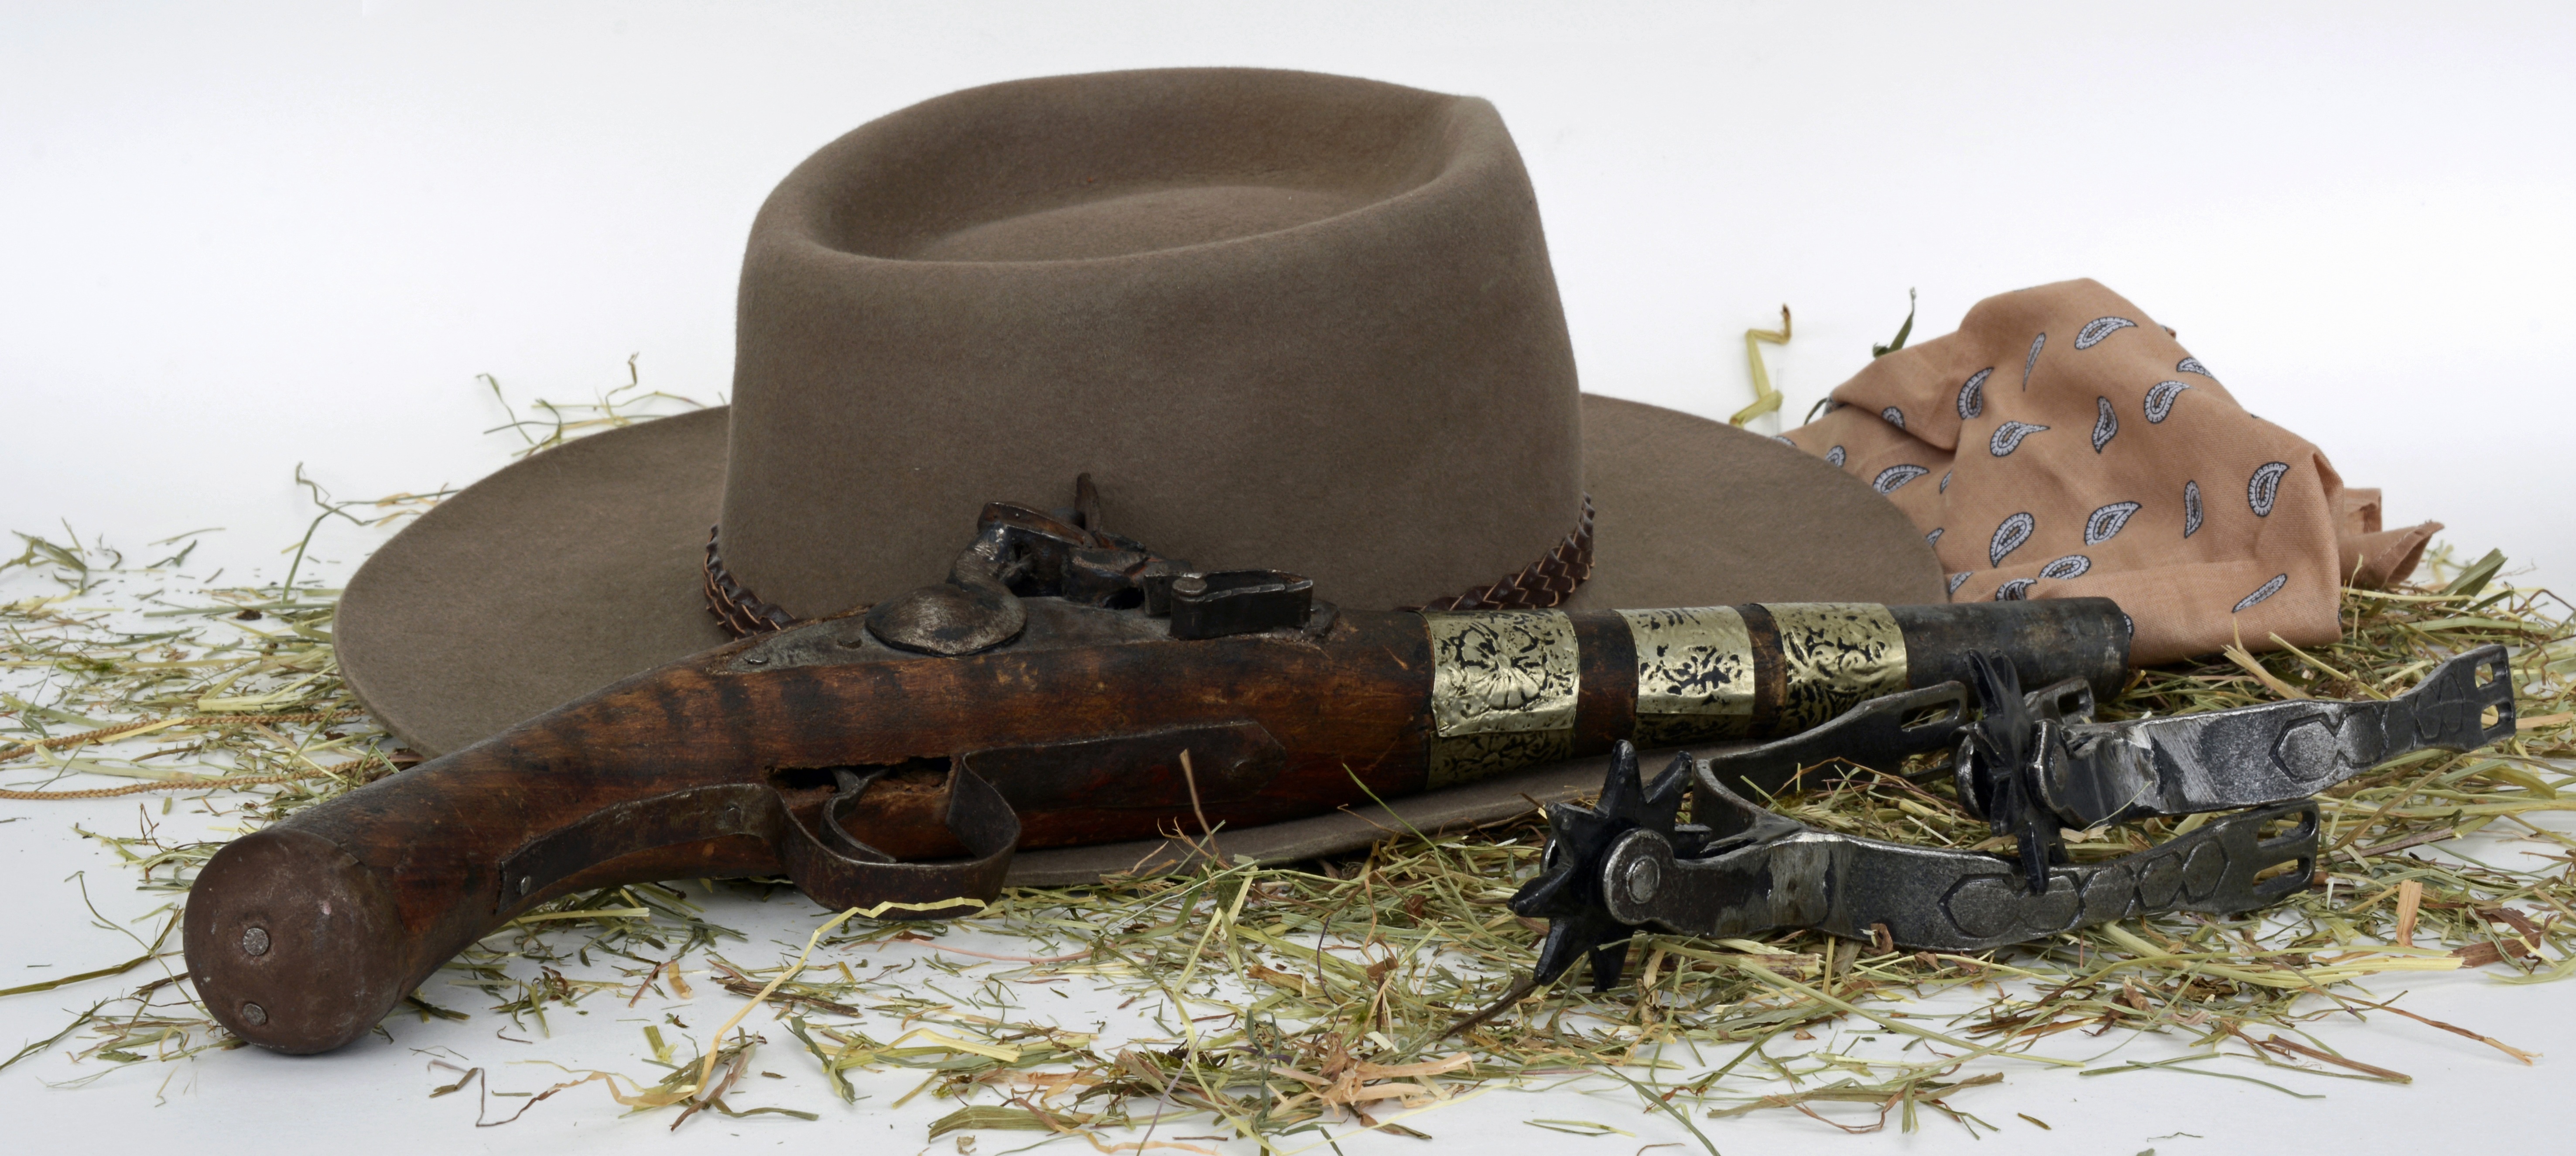 weapons, pistol, antique, gun, hat, still life, vintage